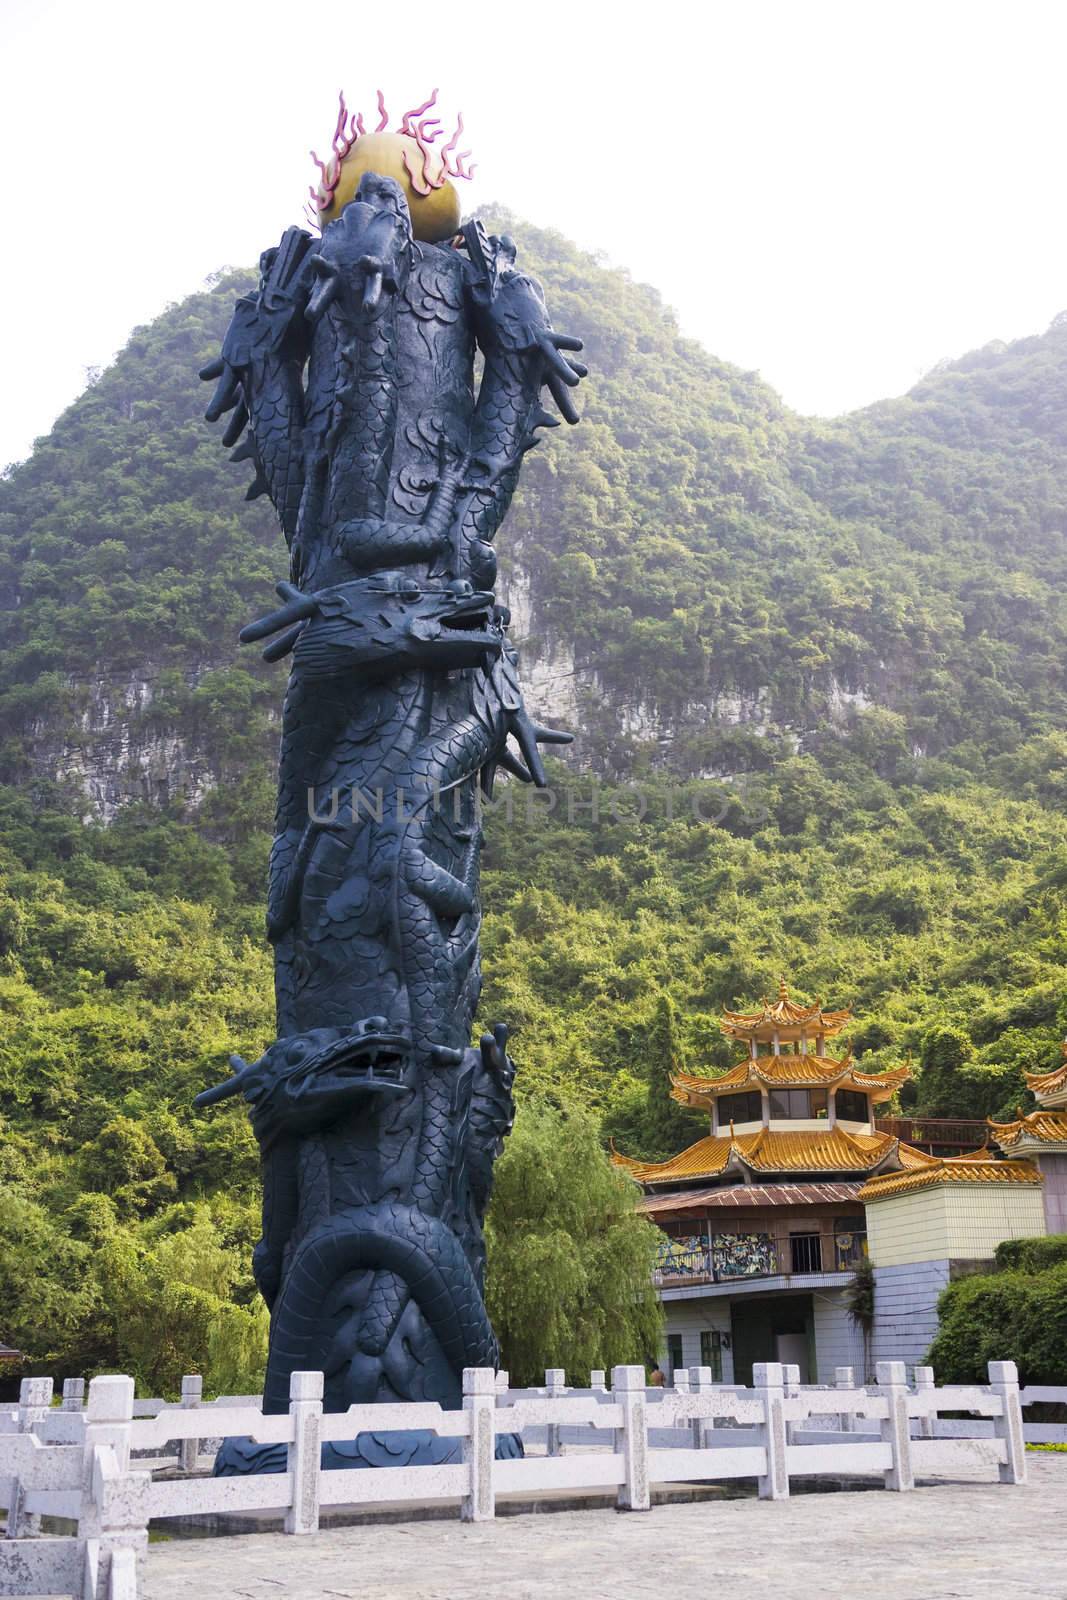 Dragonball Monument, Yangshuo, China by shariffc